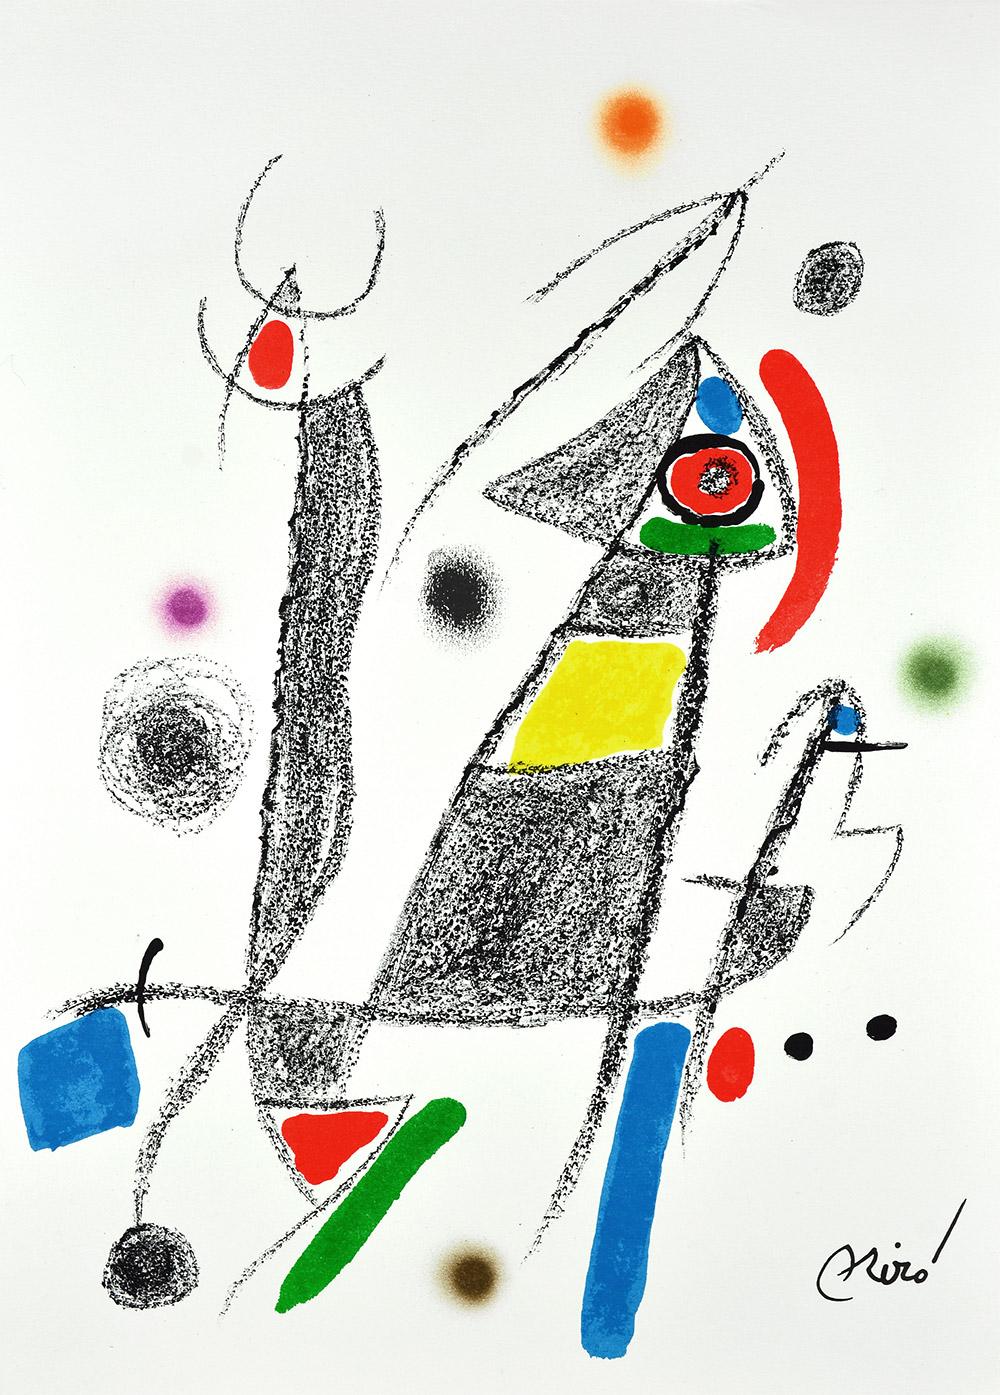 Joan Miró - Maravillas con variaciones acrósticas en el jardín de Miró VI
Datum der Gründung: 1975
Medium: Lithographie auf Gvarro-Papier
Auflage: 1500
Größe: 49,5 x 35,5 cm
Beobachtungen: Lithographie auf Gvarro-Papierplatte signiert. Herausgegeben